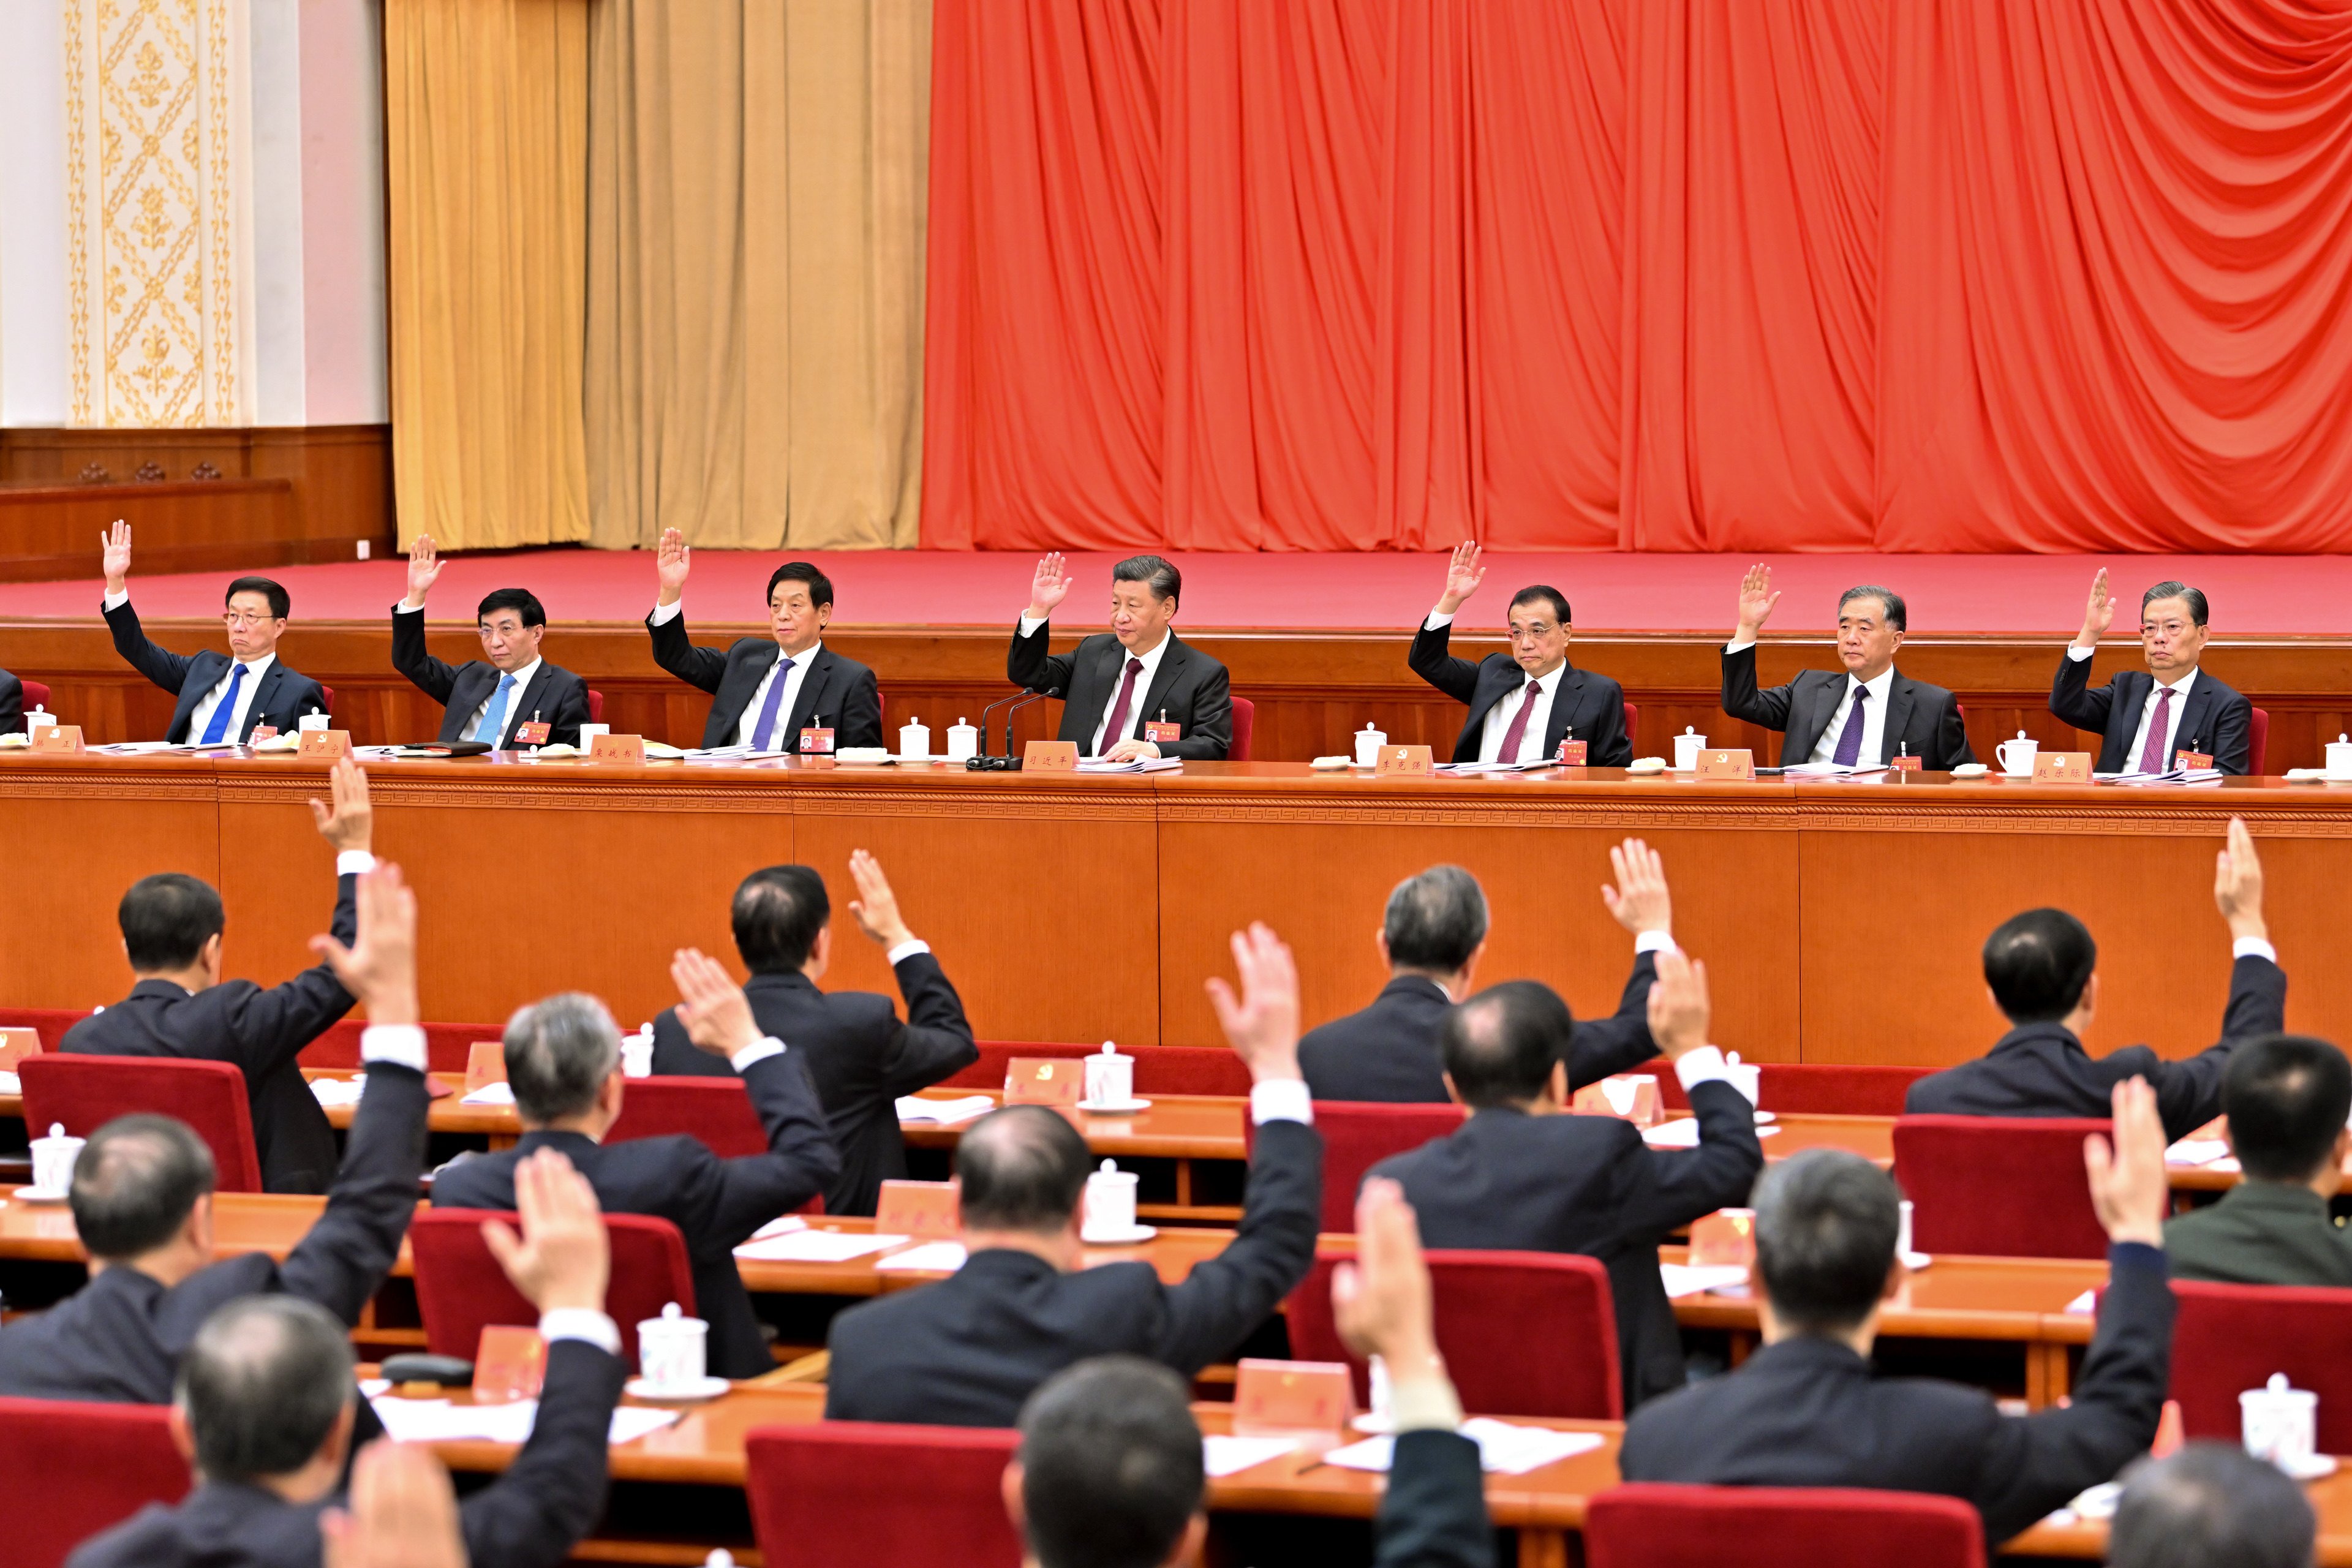 Xi Jinping, Li Keqiang, Li Zhanshu, Wang Yang, Wang Huning, Zhao Leji and Han Zheng attend the sixth plenary session of the 19th Communist Party of China Central Committee in Beijing, capital of China. The session was held in Beijing from Nov. 8 to 11, 2021.  Photo: Xinhua